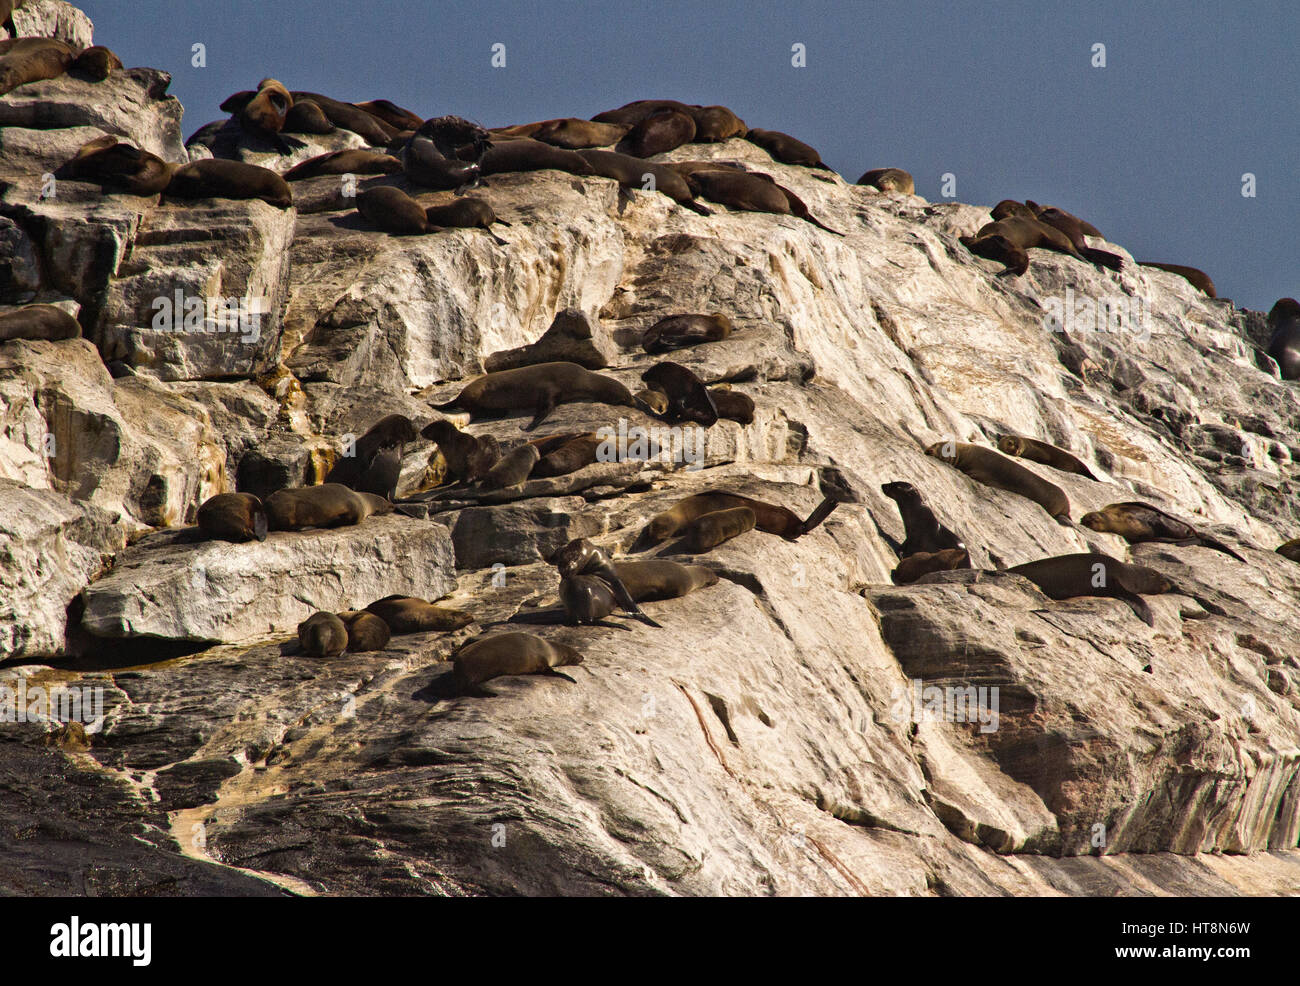 Seals basking on the whitened rocks at Diaz Point, Namibia Stock Photo